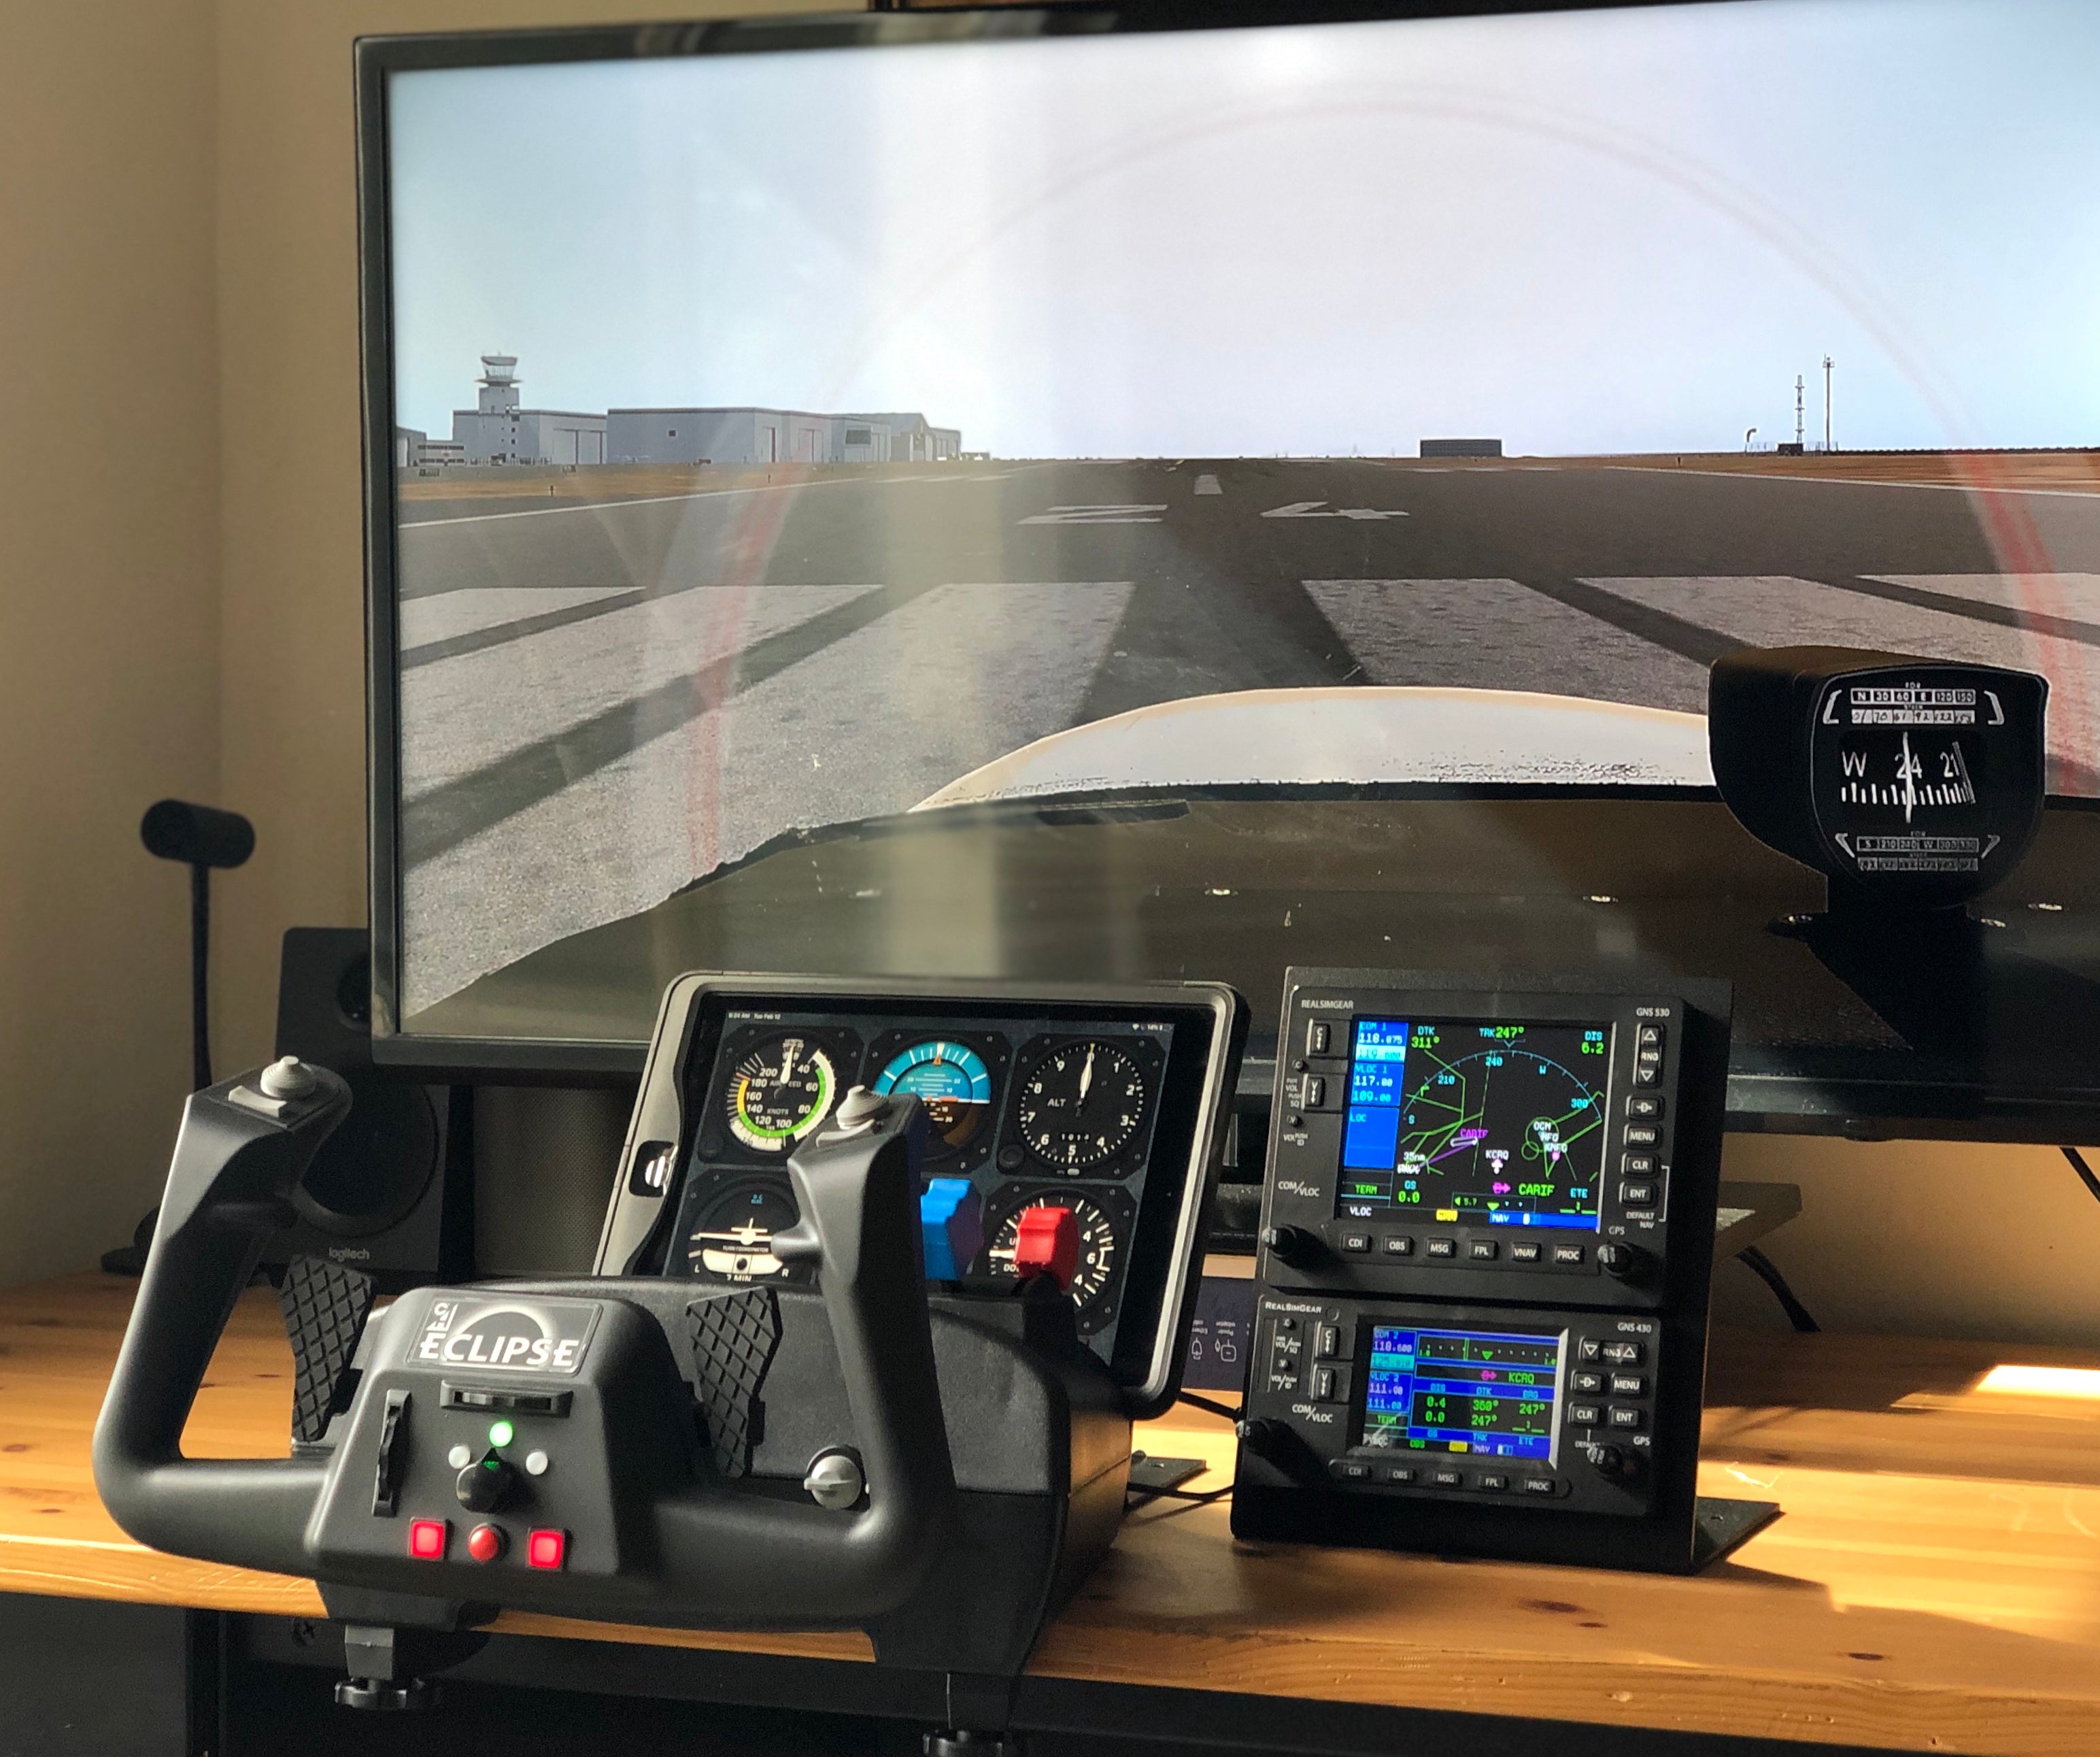 Ultimate Flight Simulator Pro download the last version for ios